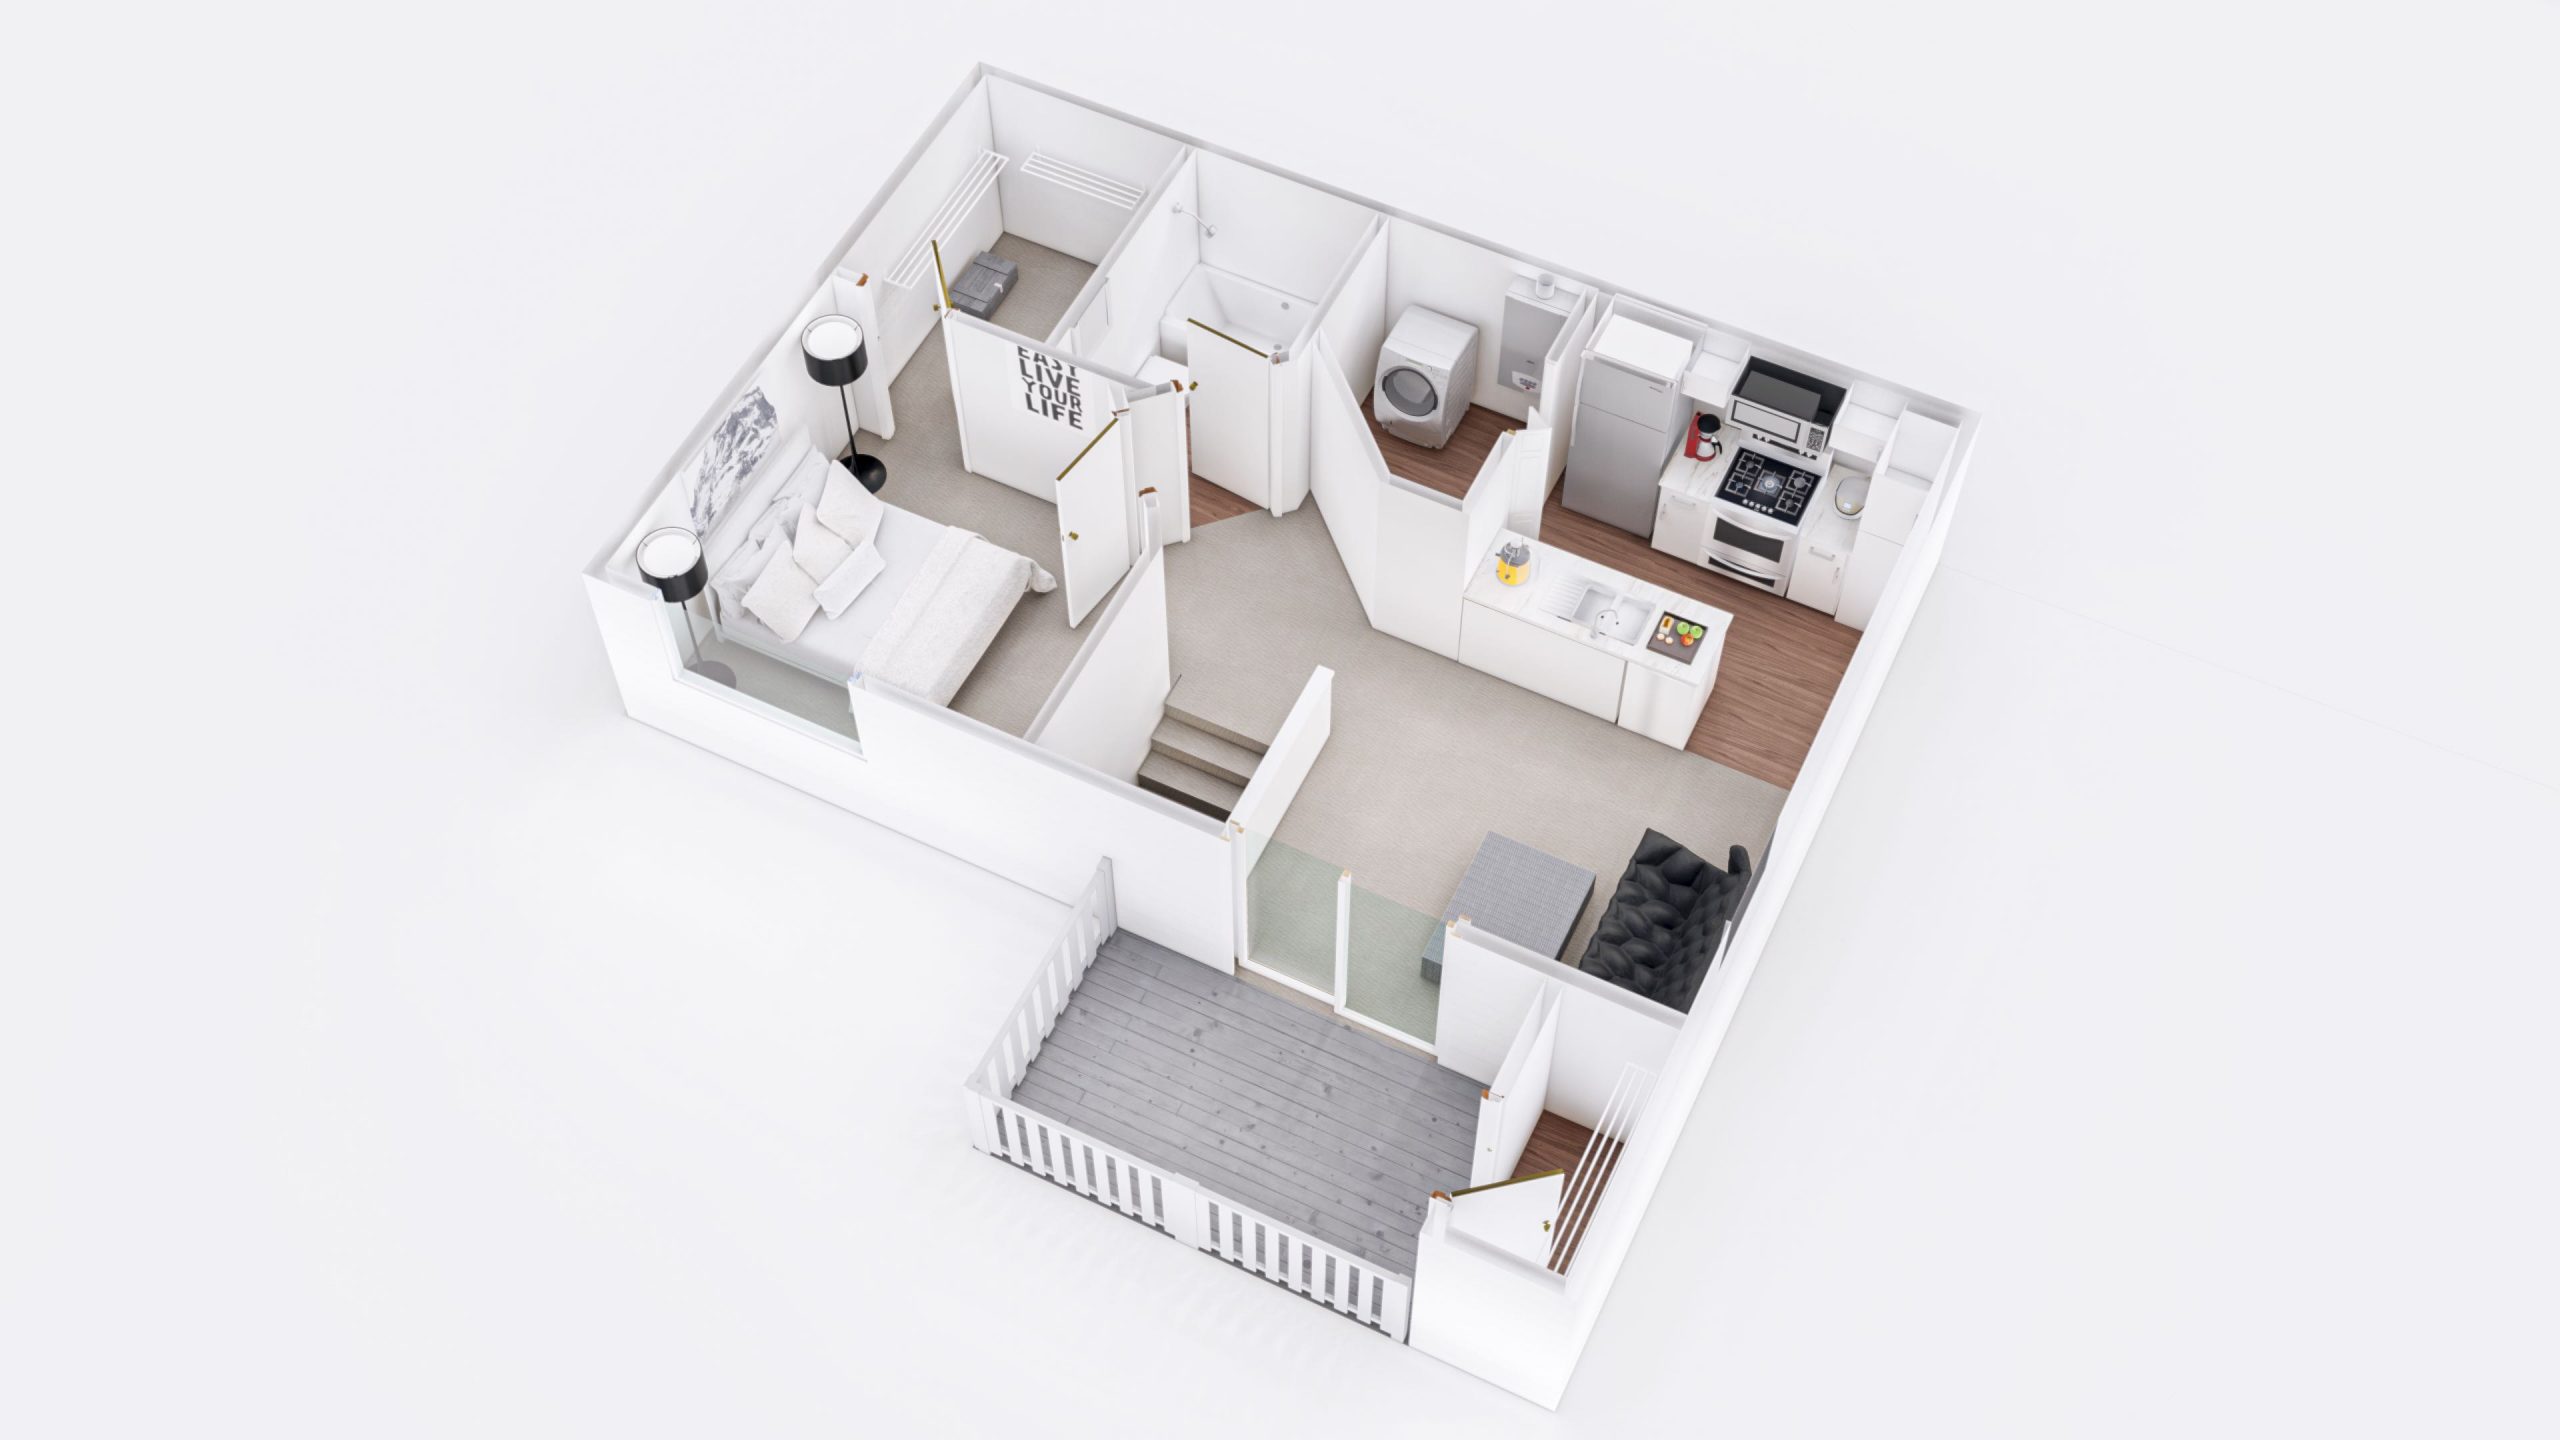 Maple 1 floorplan featuring one bedroom and one bathroom